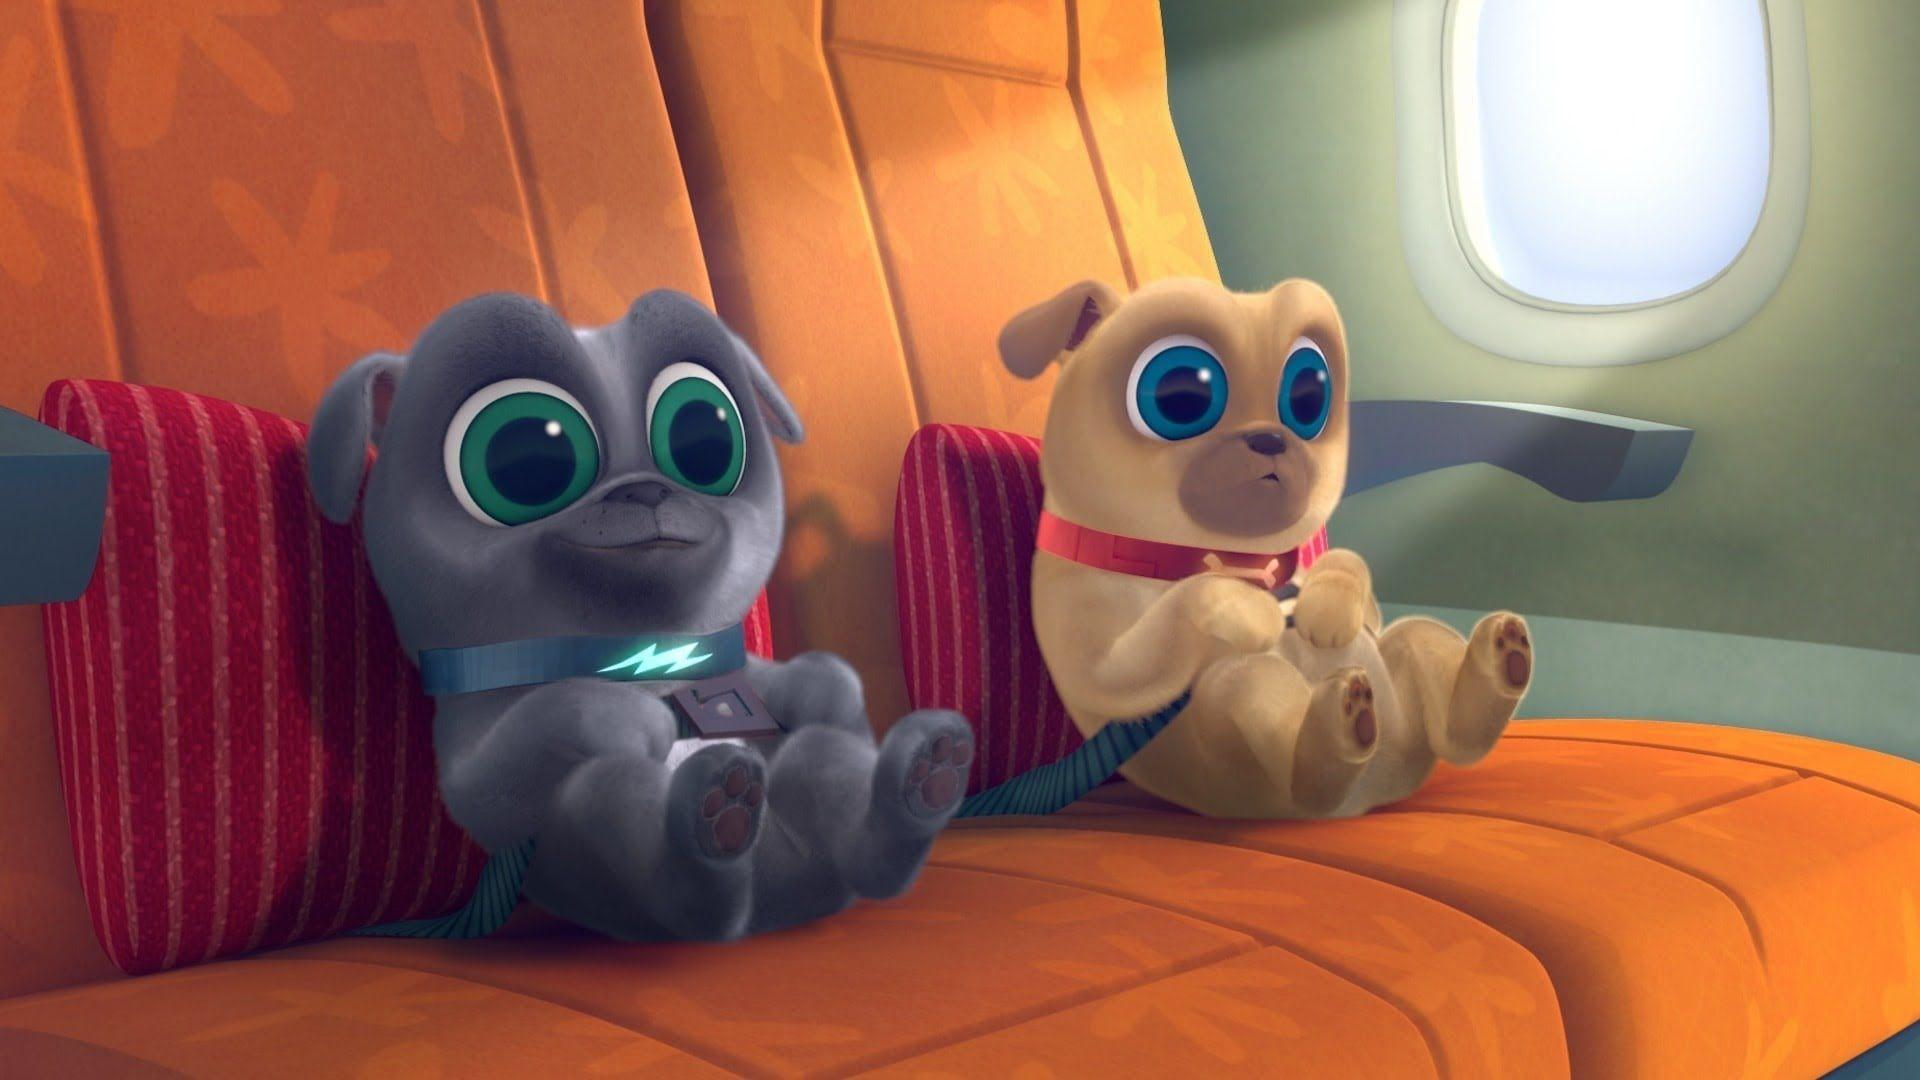 Puppy Dog Pals Episodes on Disney JR, Disney, DisneyNOW